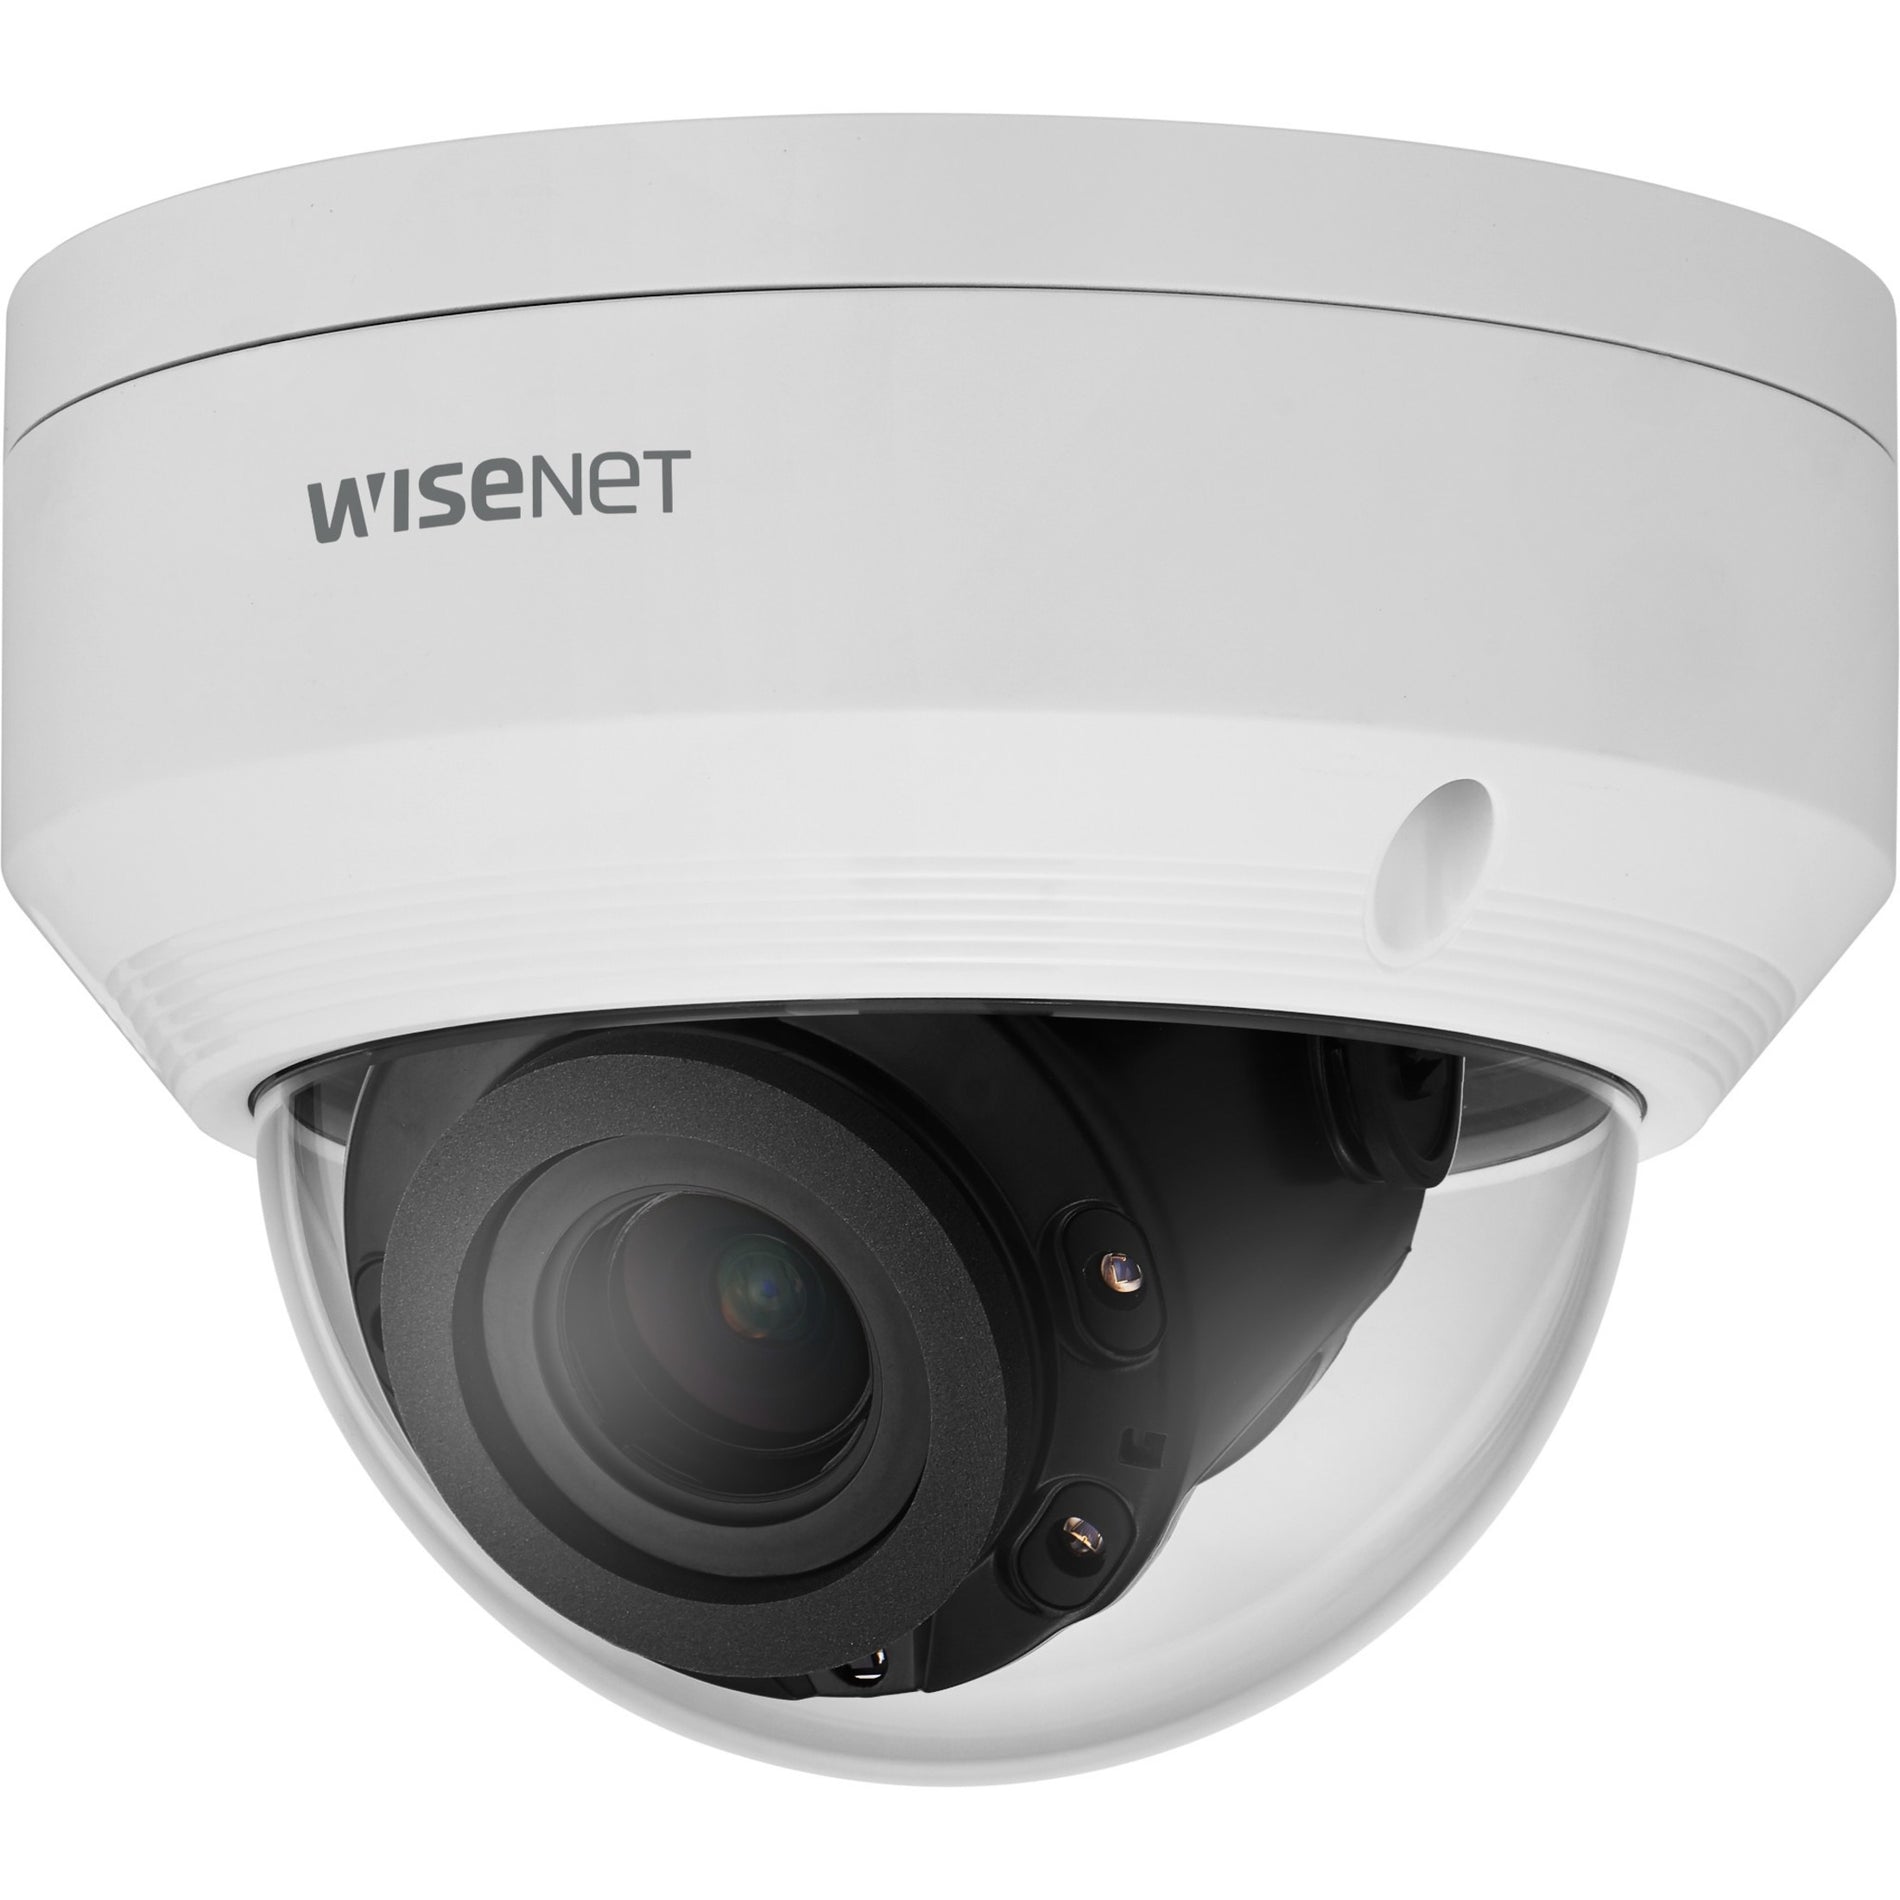 Wisenet ANV-L7082R 4MP IR Vandal Dome Network Camera, Color, Varifocal Lens, 3.1x Optical Zoom, Memory Card Storage, 2560 x 1440 Resolution